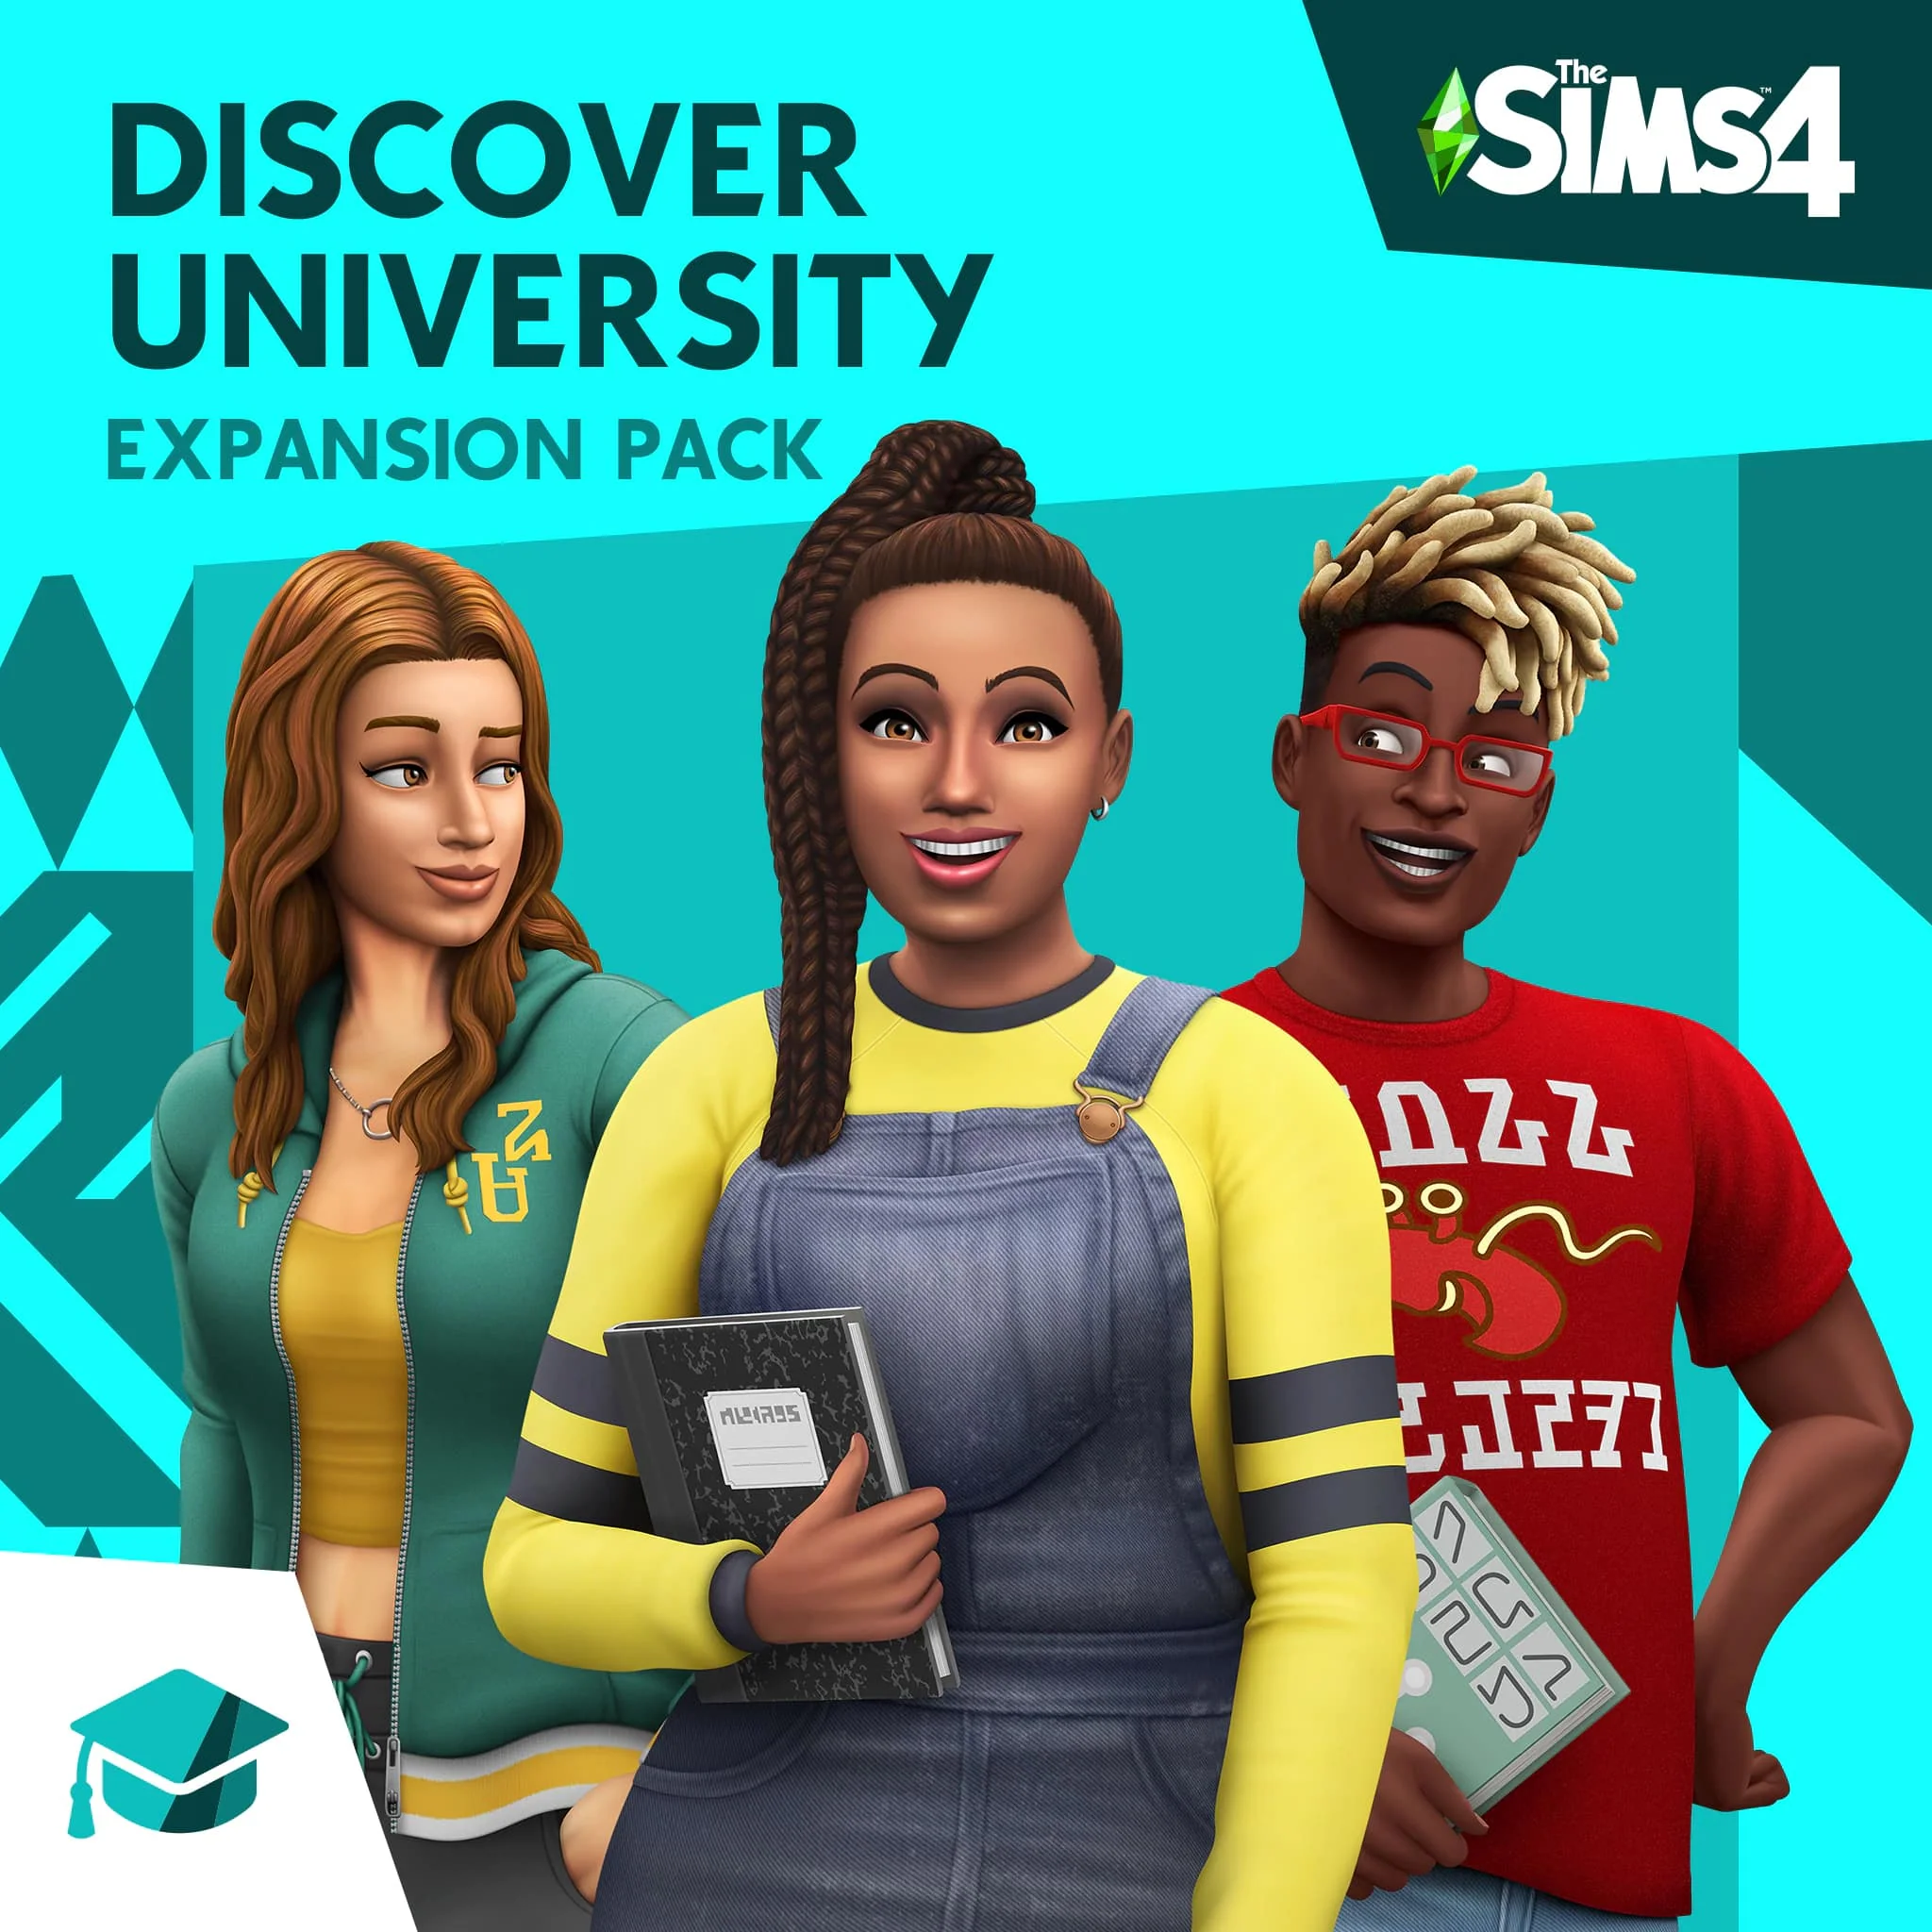 The Sims 4: Discover University DLC Global EA App